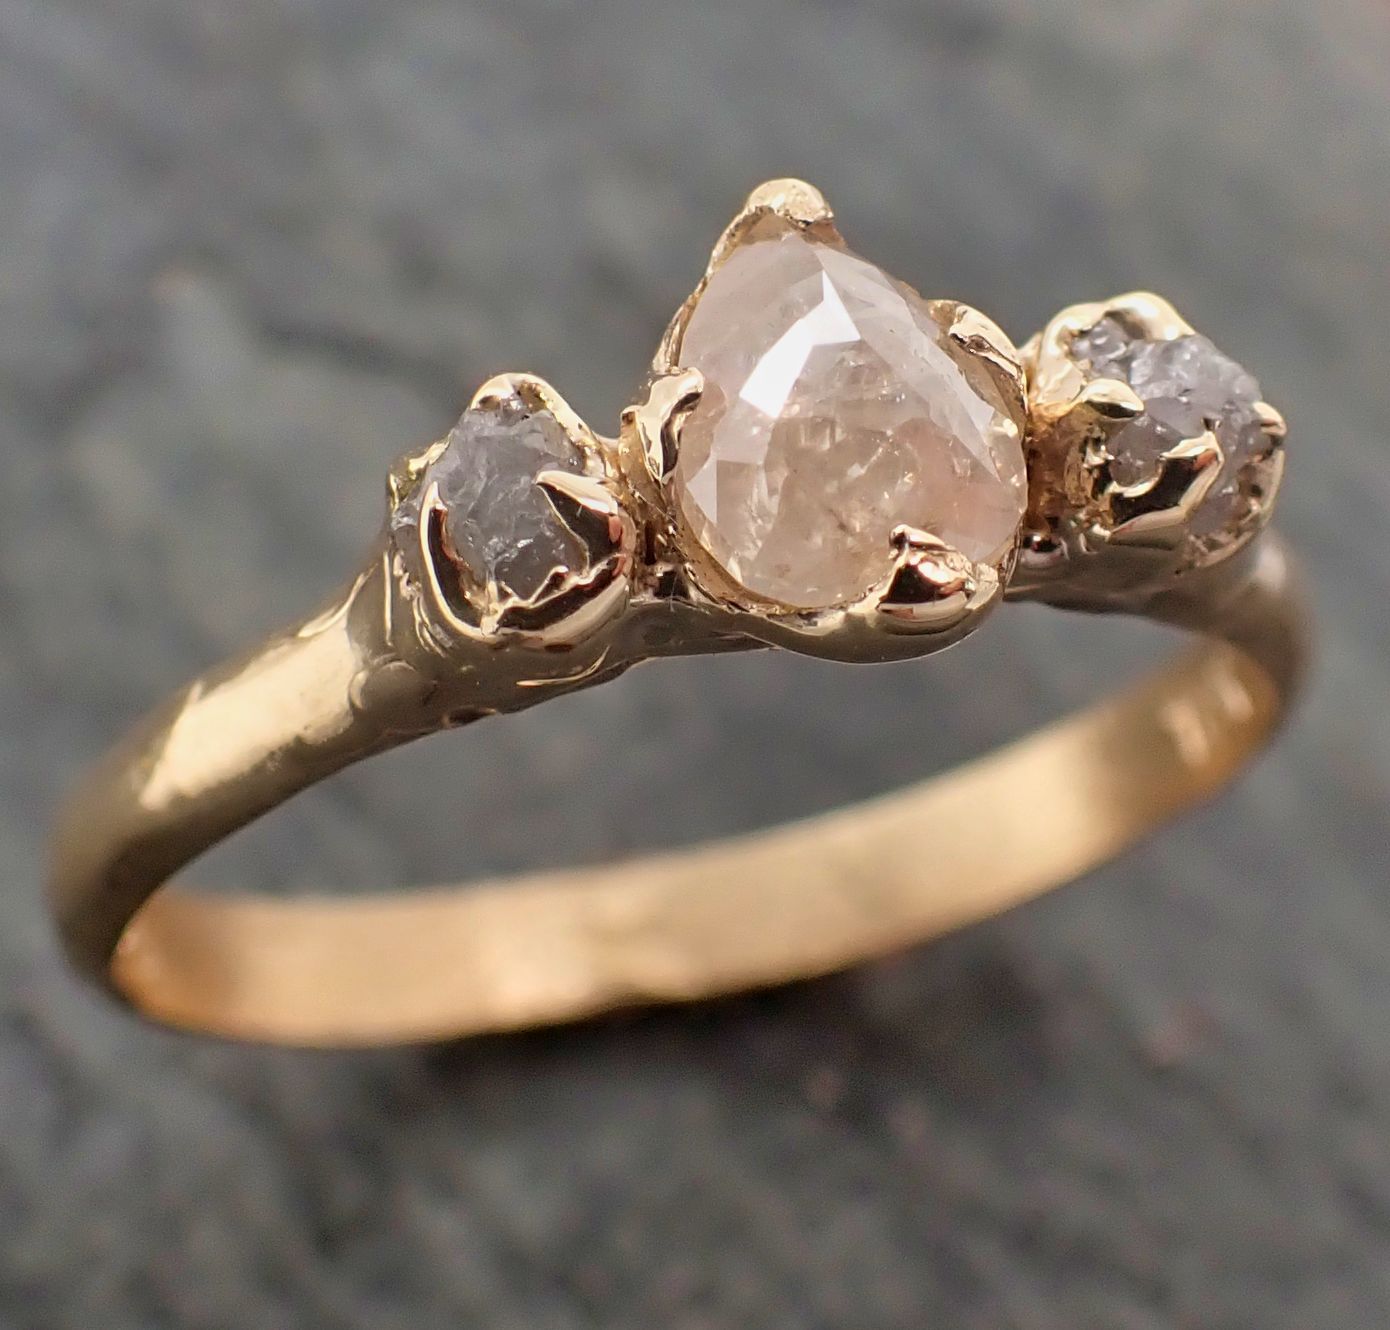 fancy cut white diamond engagement 18k yellow gold multi stone wedding ring stacking rough diamond ring byangeline 2263 Alternative Engagement